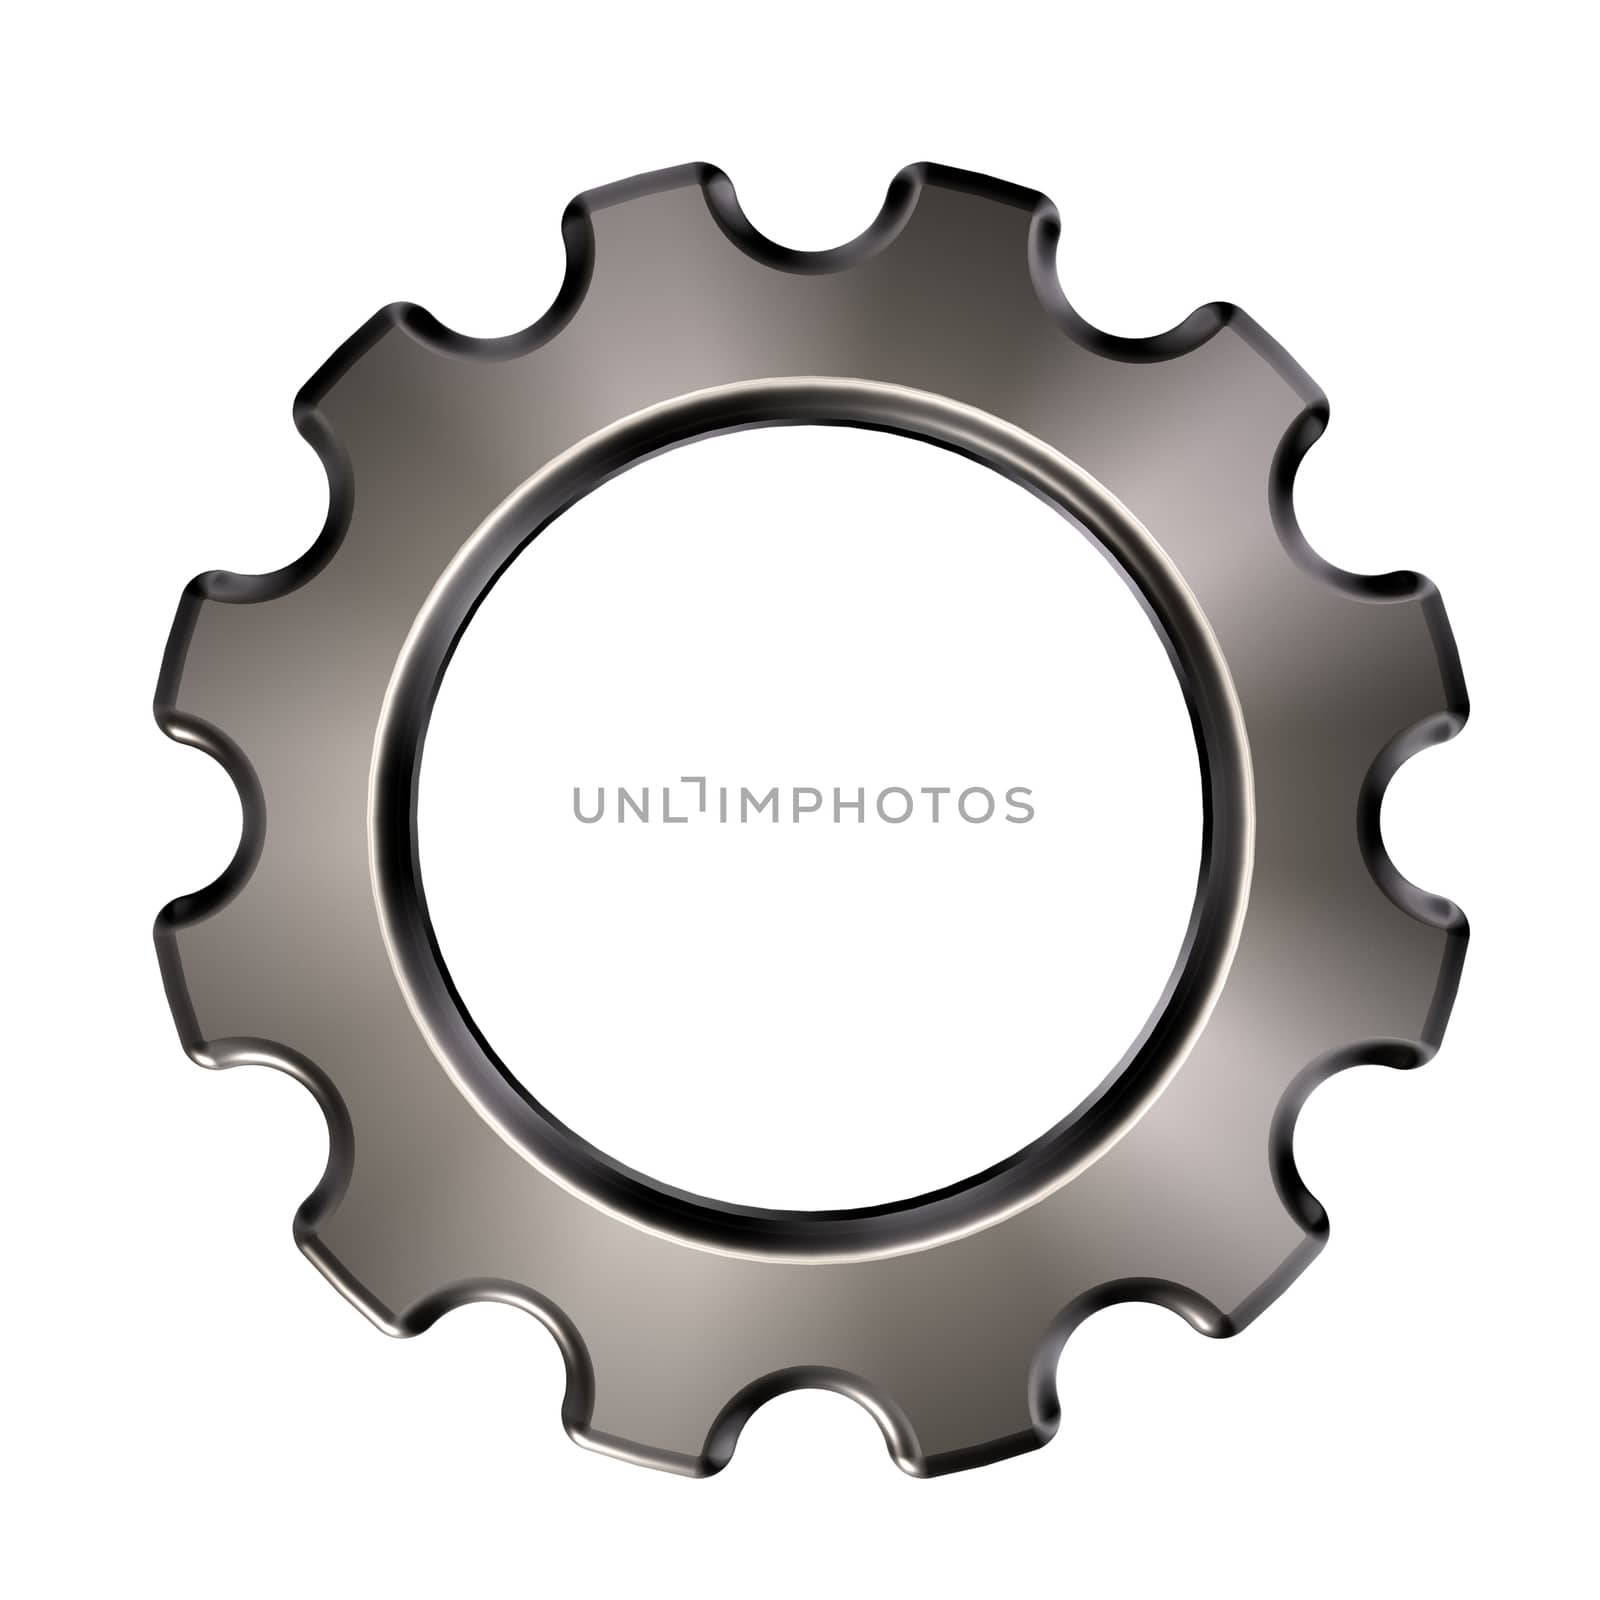 metal gear wheel on white background - 3d illustration